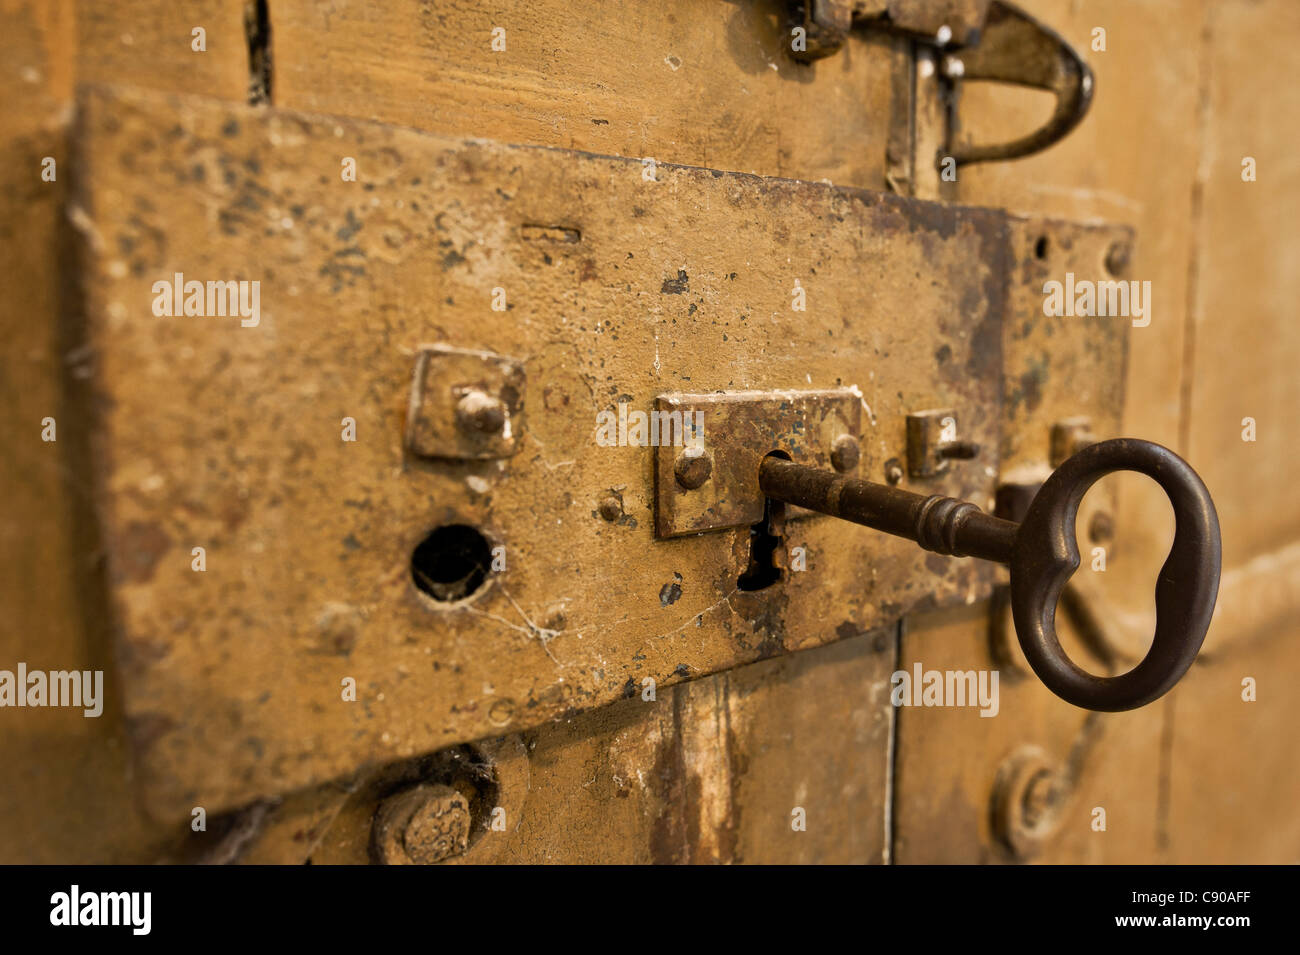 Alte Schlüssel in ein Türschloss Stockfotografie - Alamy